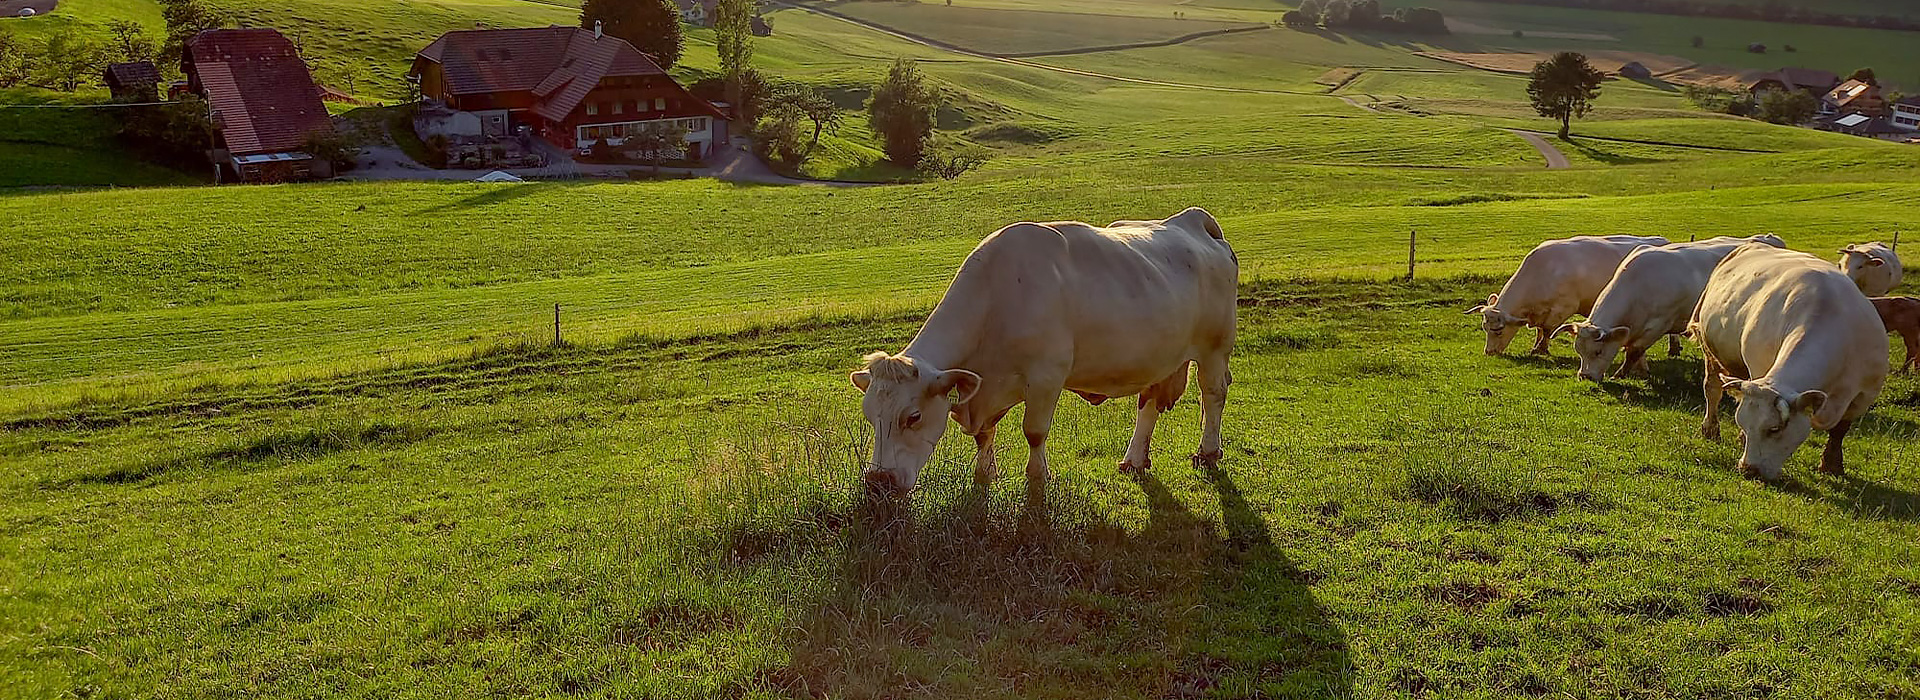 Lebenshof KuhErde - Kühe auf der Weide